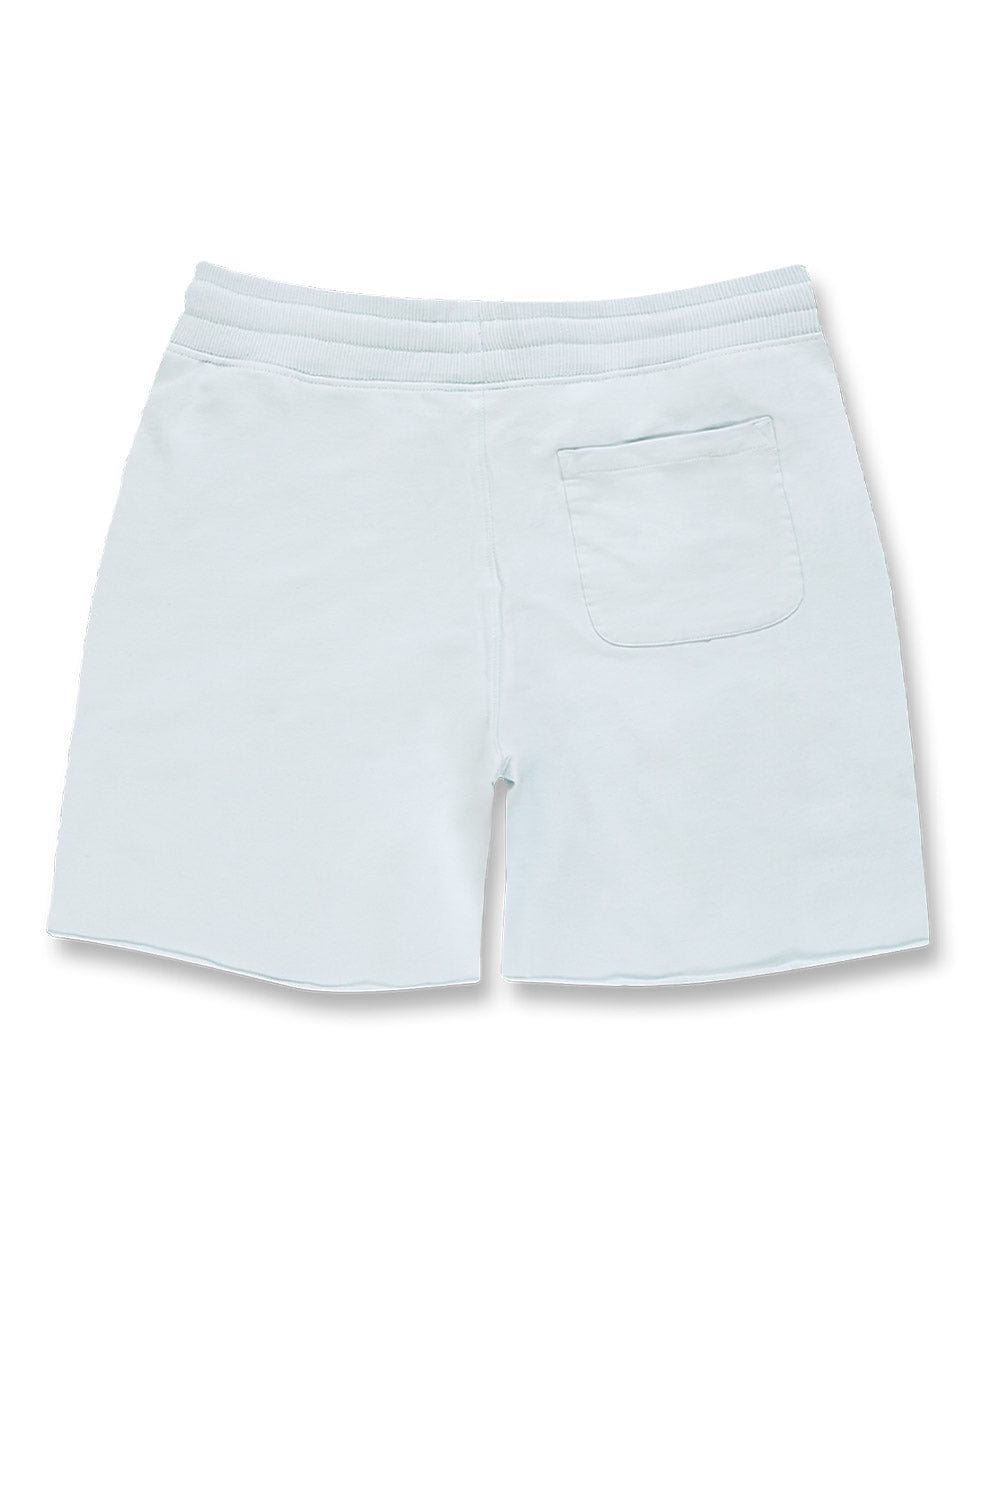 Jordan Craig Athletic - Summer Breeze Knit Shorts